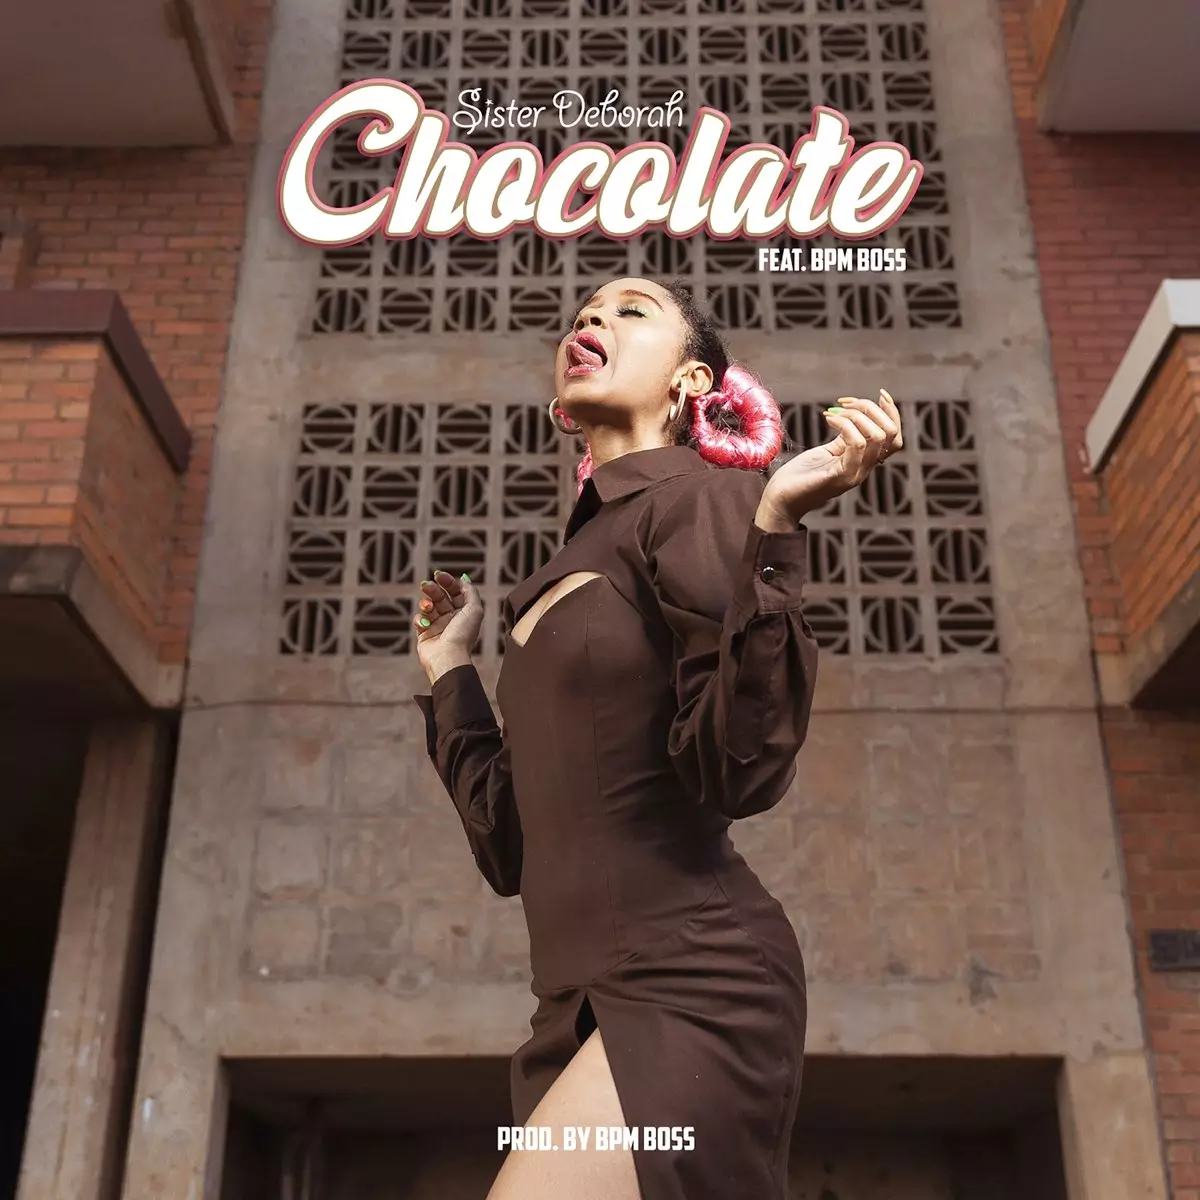 Chocolate (feat. Bpm Boss) - Single by Sister Deborah on Apple Music